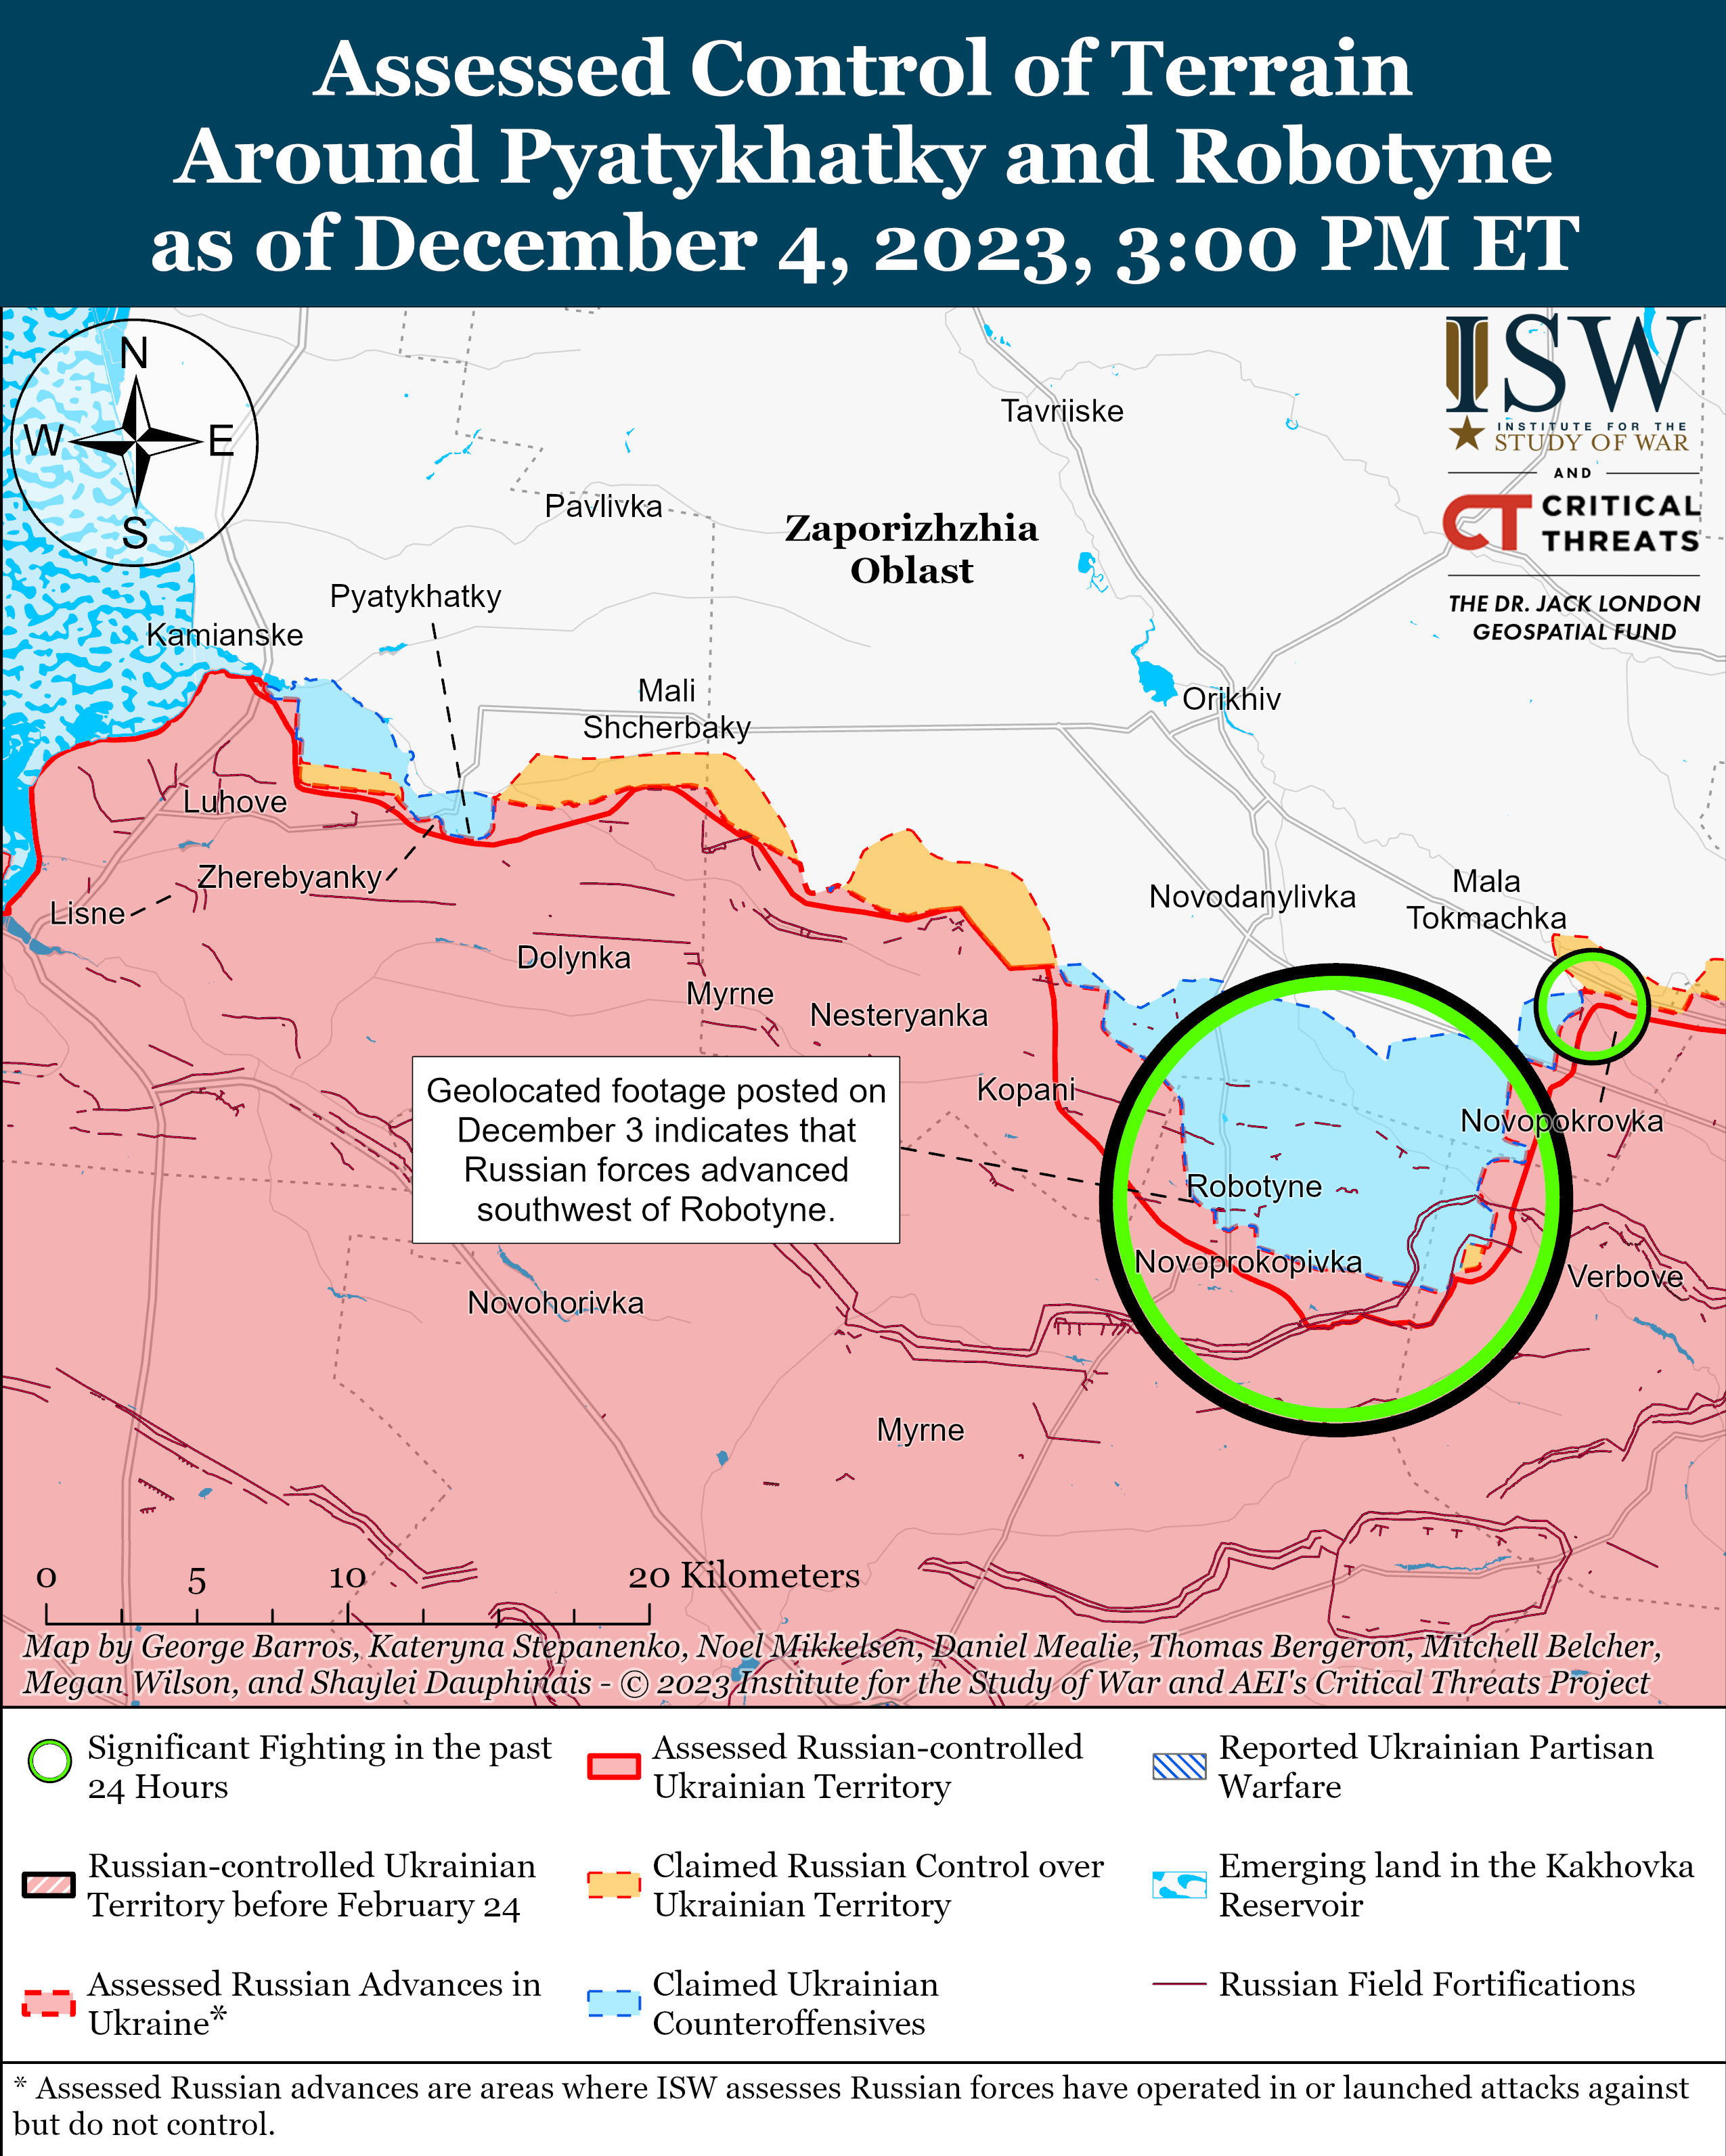 Pryatykhatky_and_Robotyne_Battle_Map_Draft_December_4_2023.png